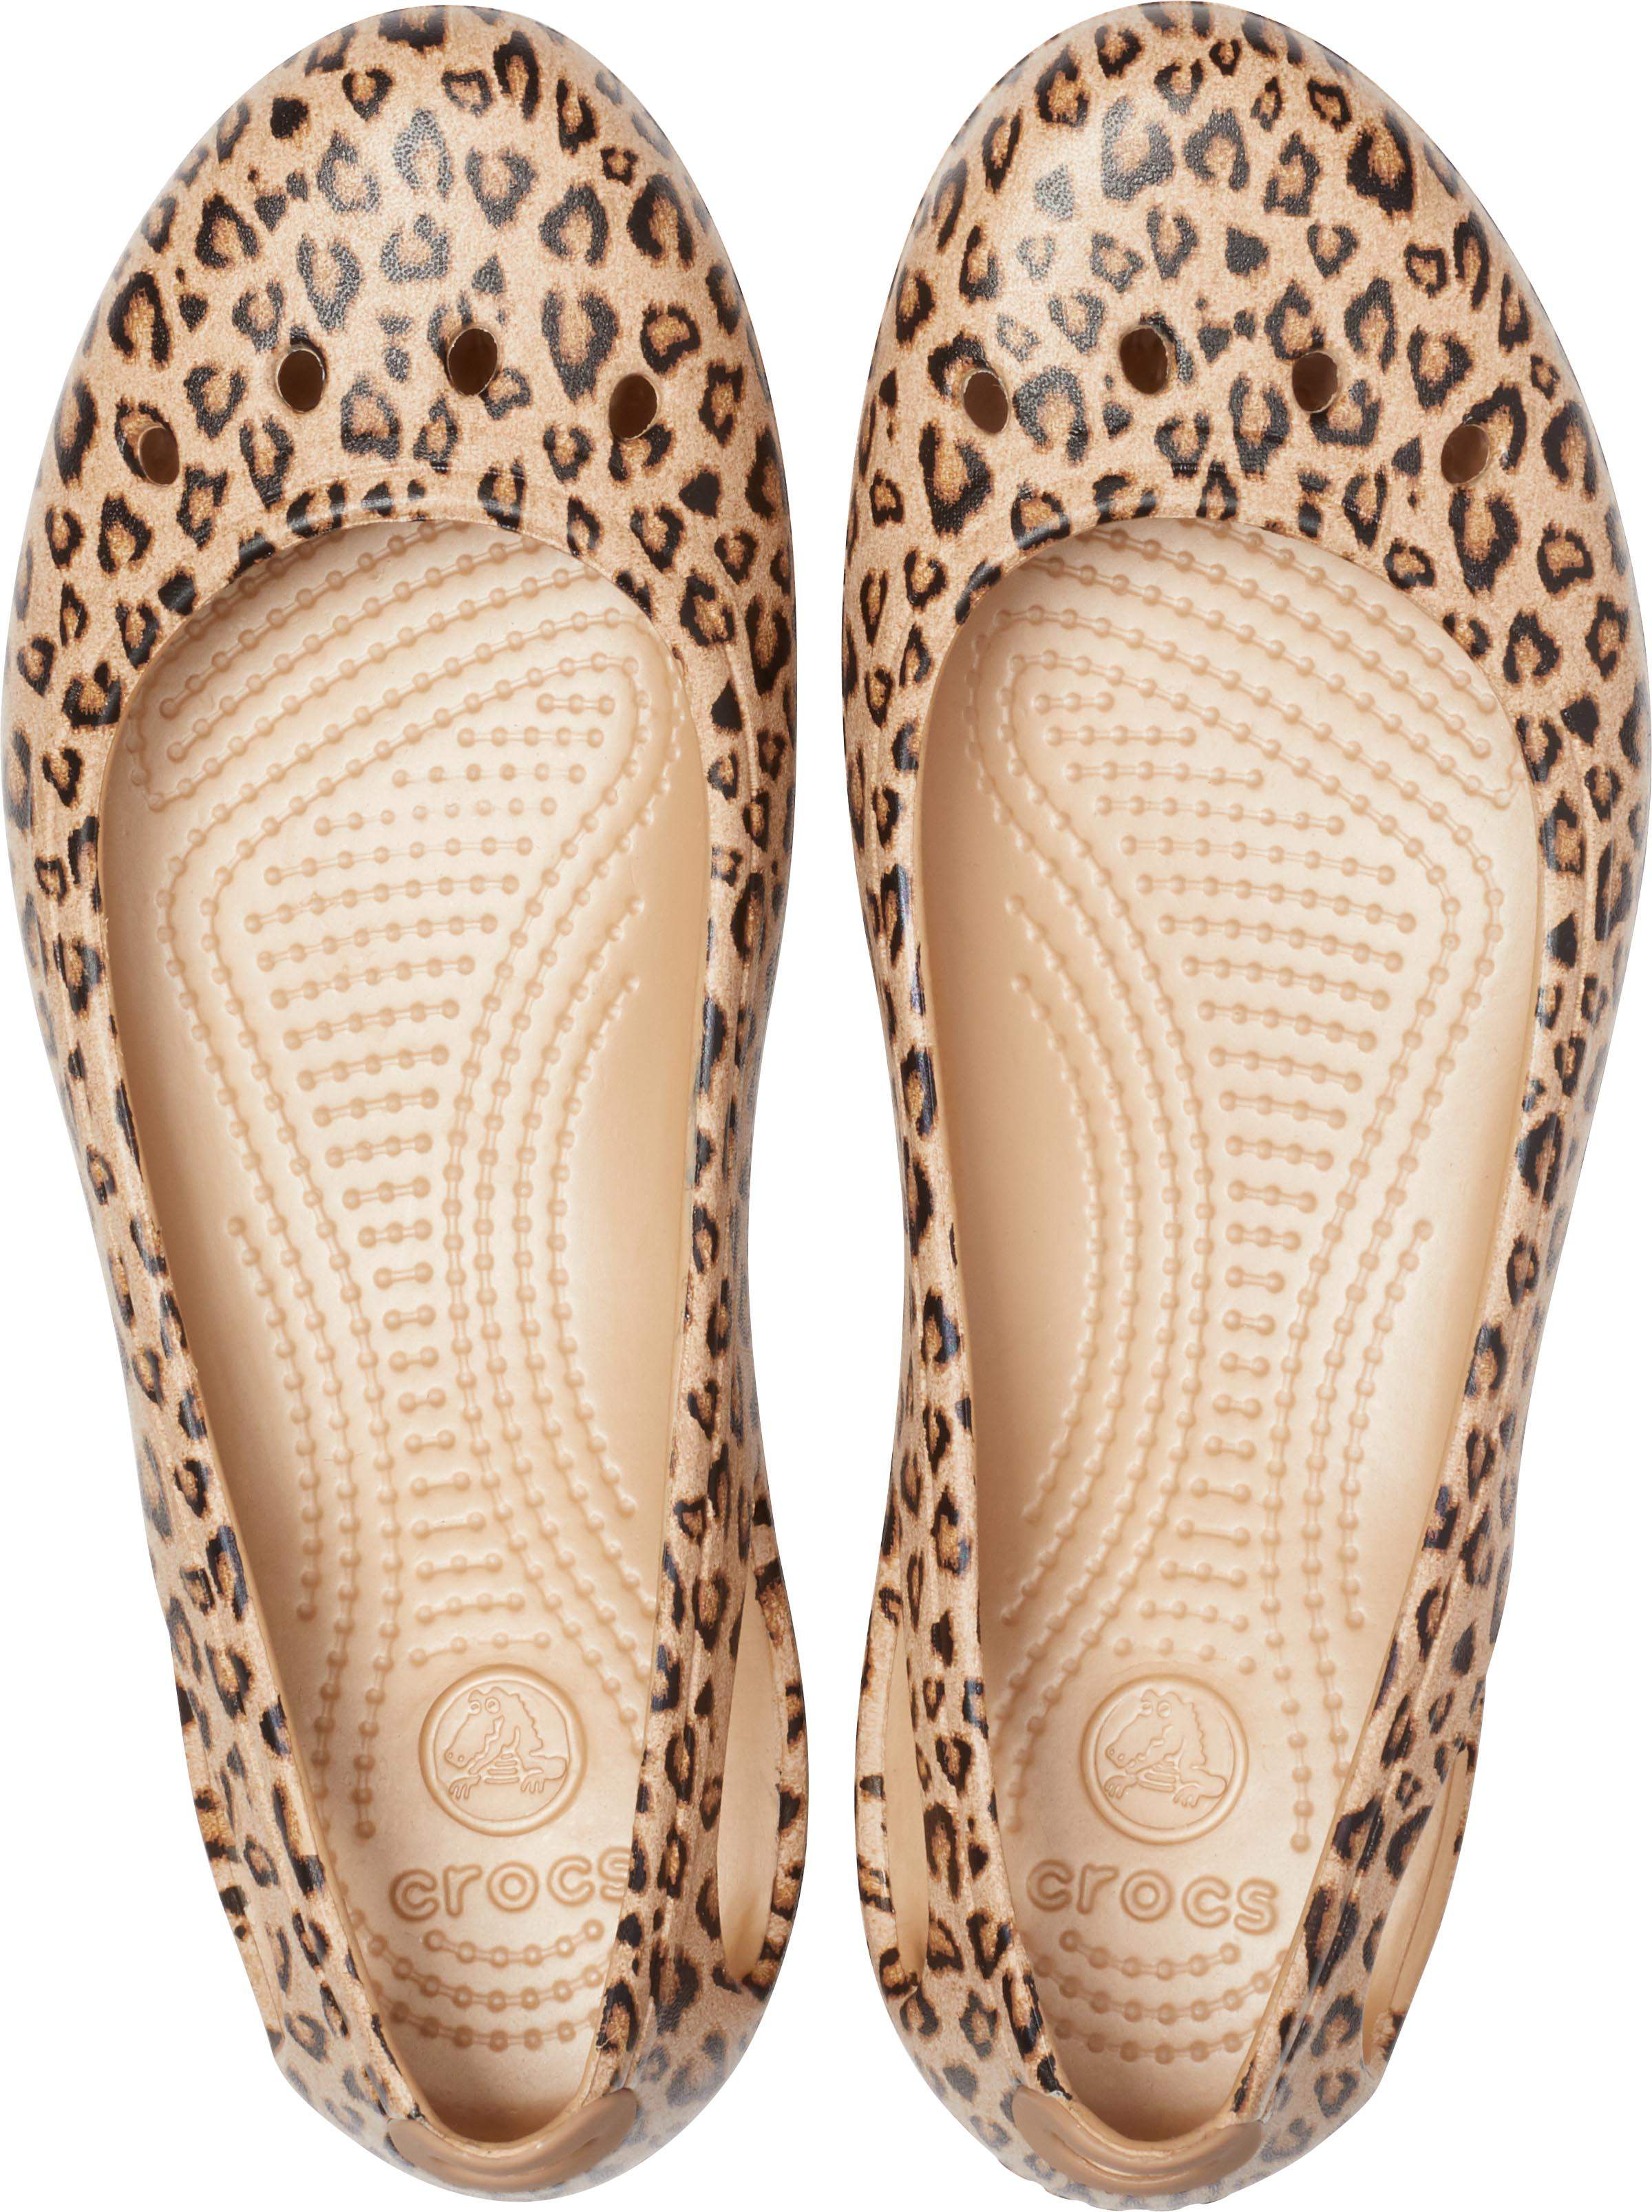 kadee leopard crocs